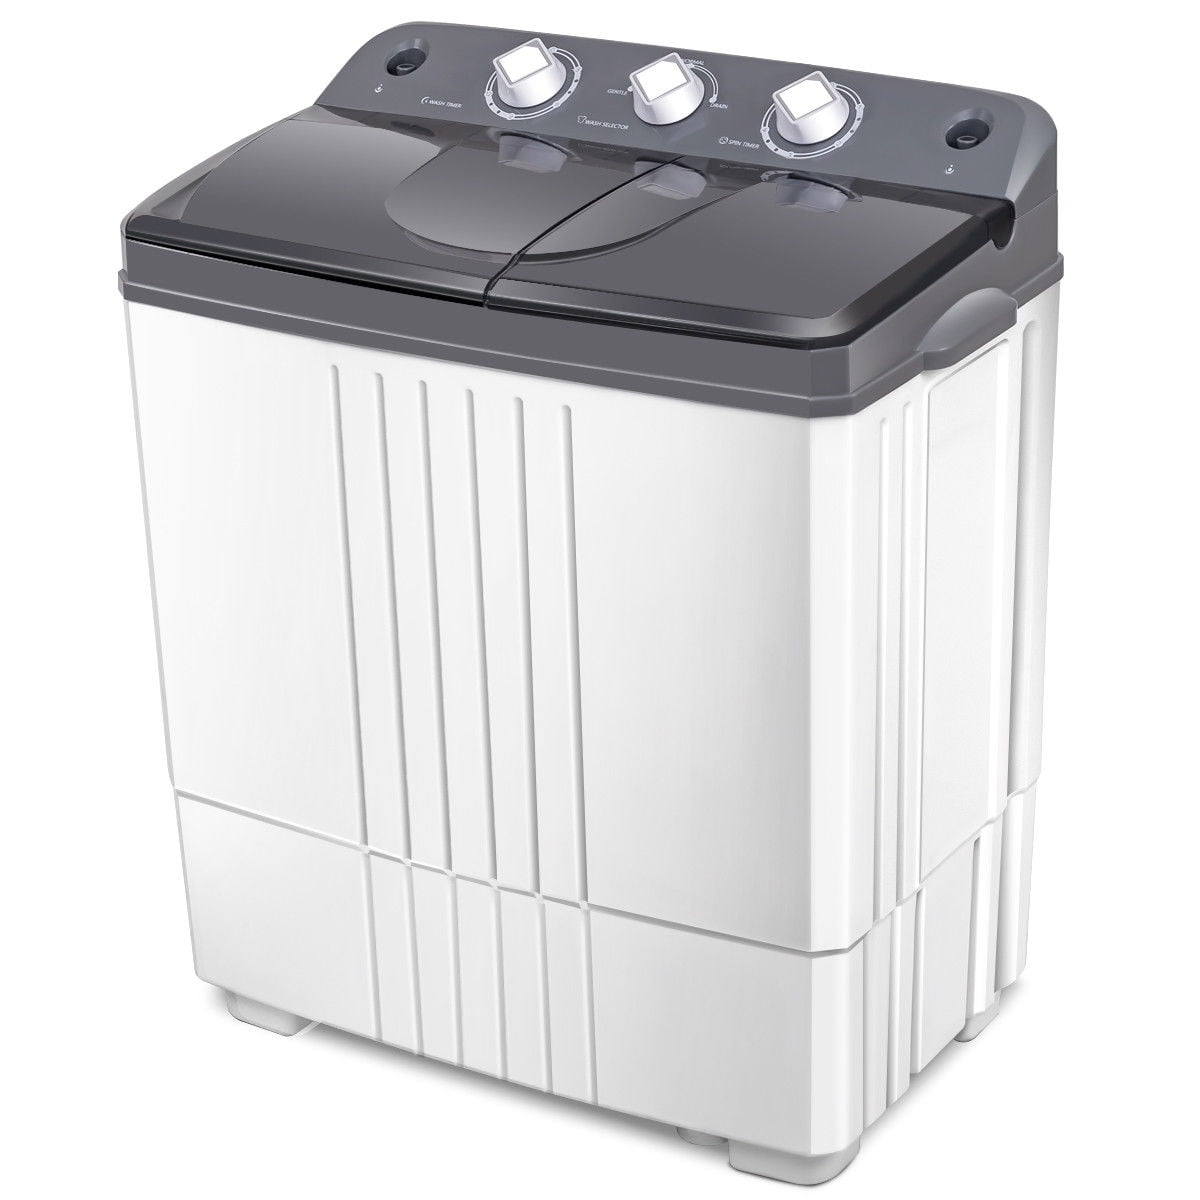 Portable Mini Compact Twin Tub Washing Machine 17.6 Lbs Washer Spain Spinner New 